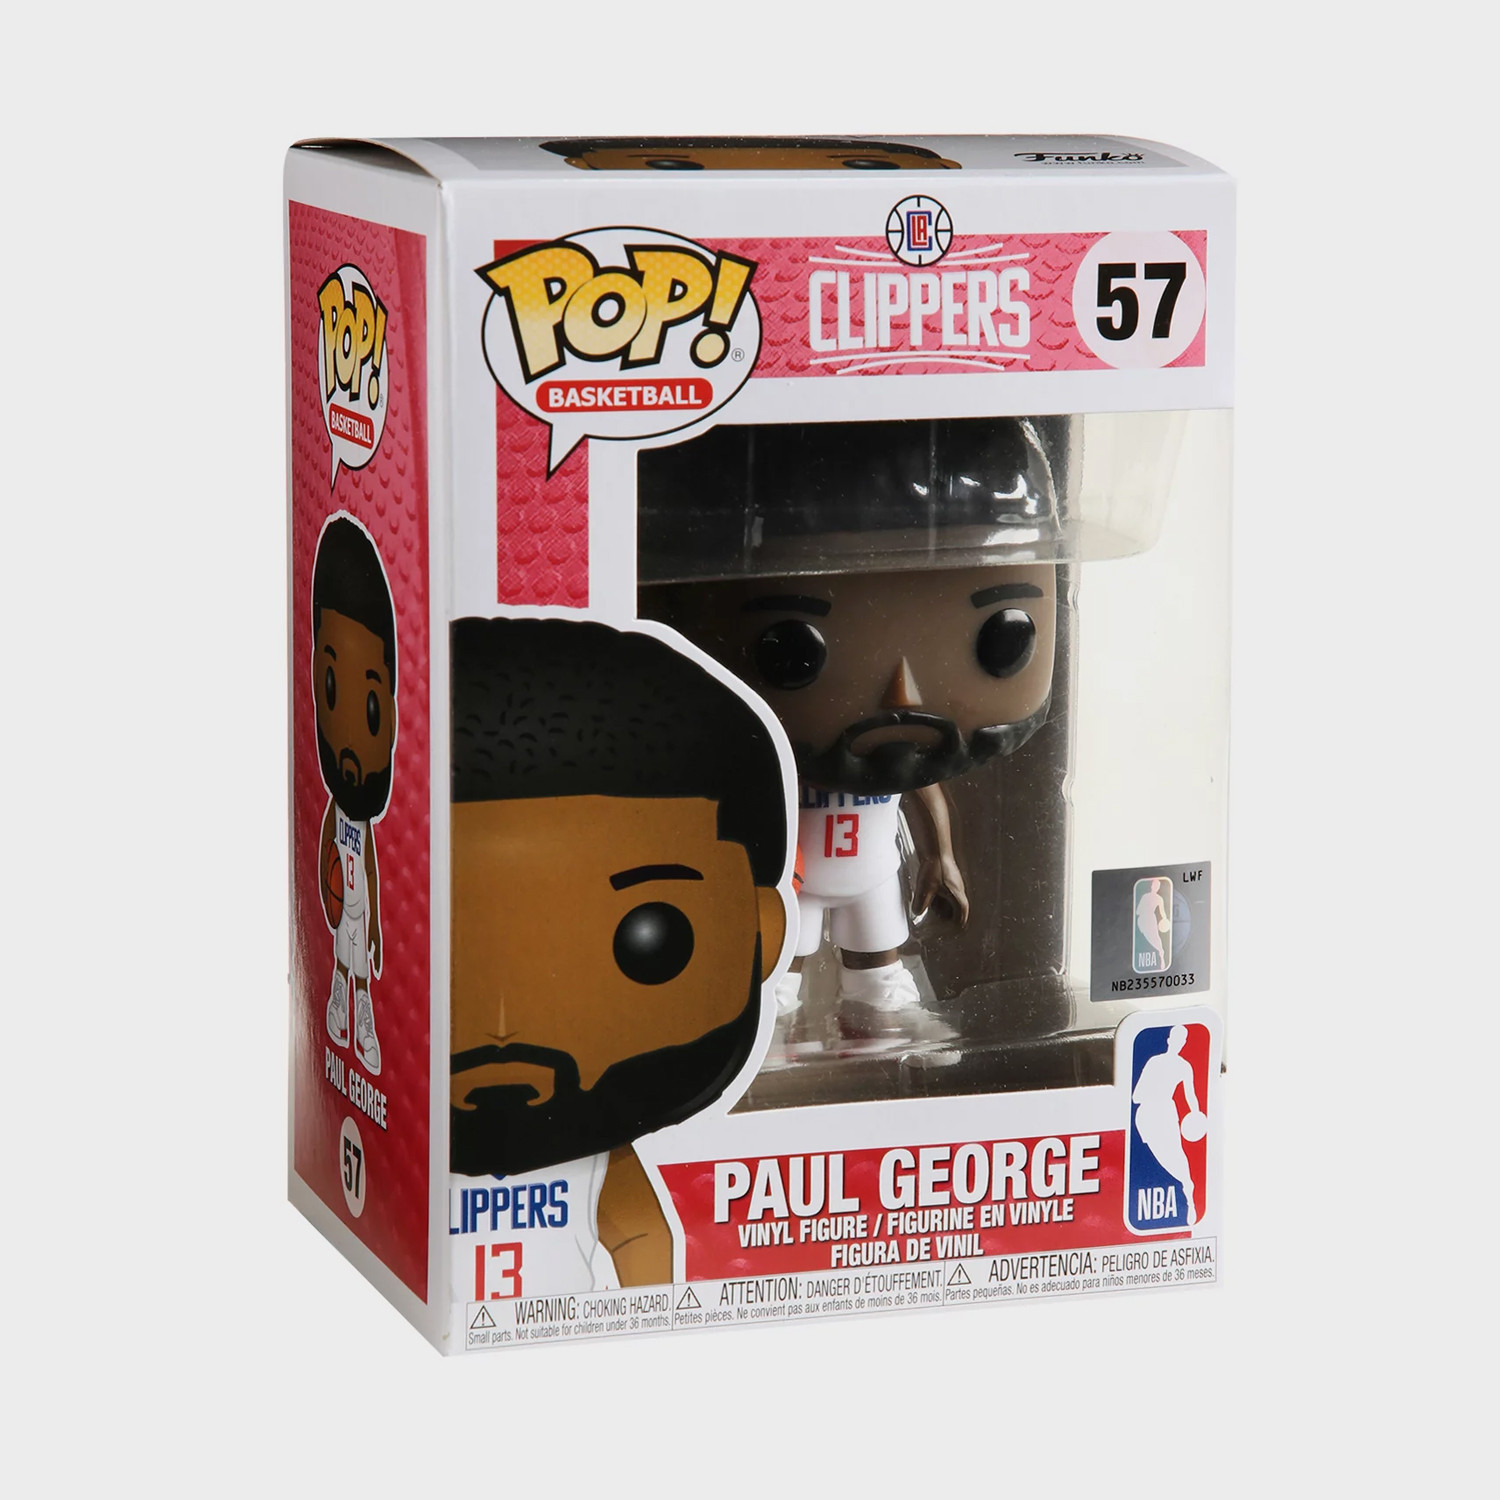 Funko Pop! NBA Los Angeles Clippers - Paul George (9000069334_50291)